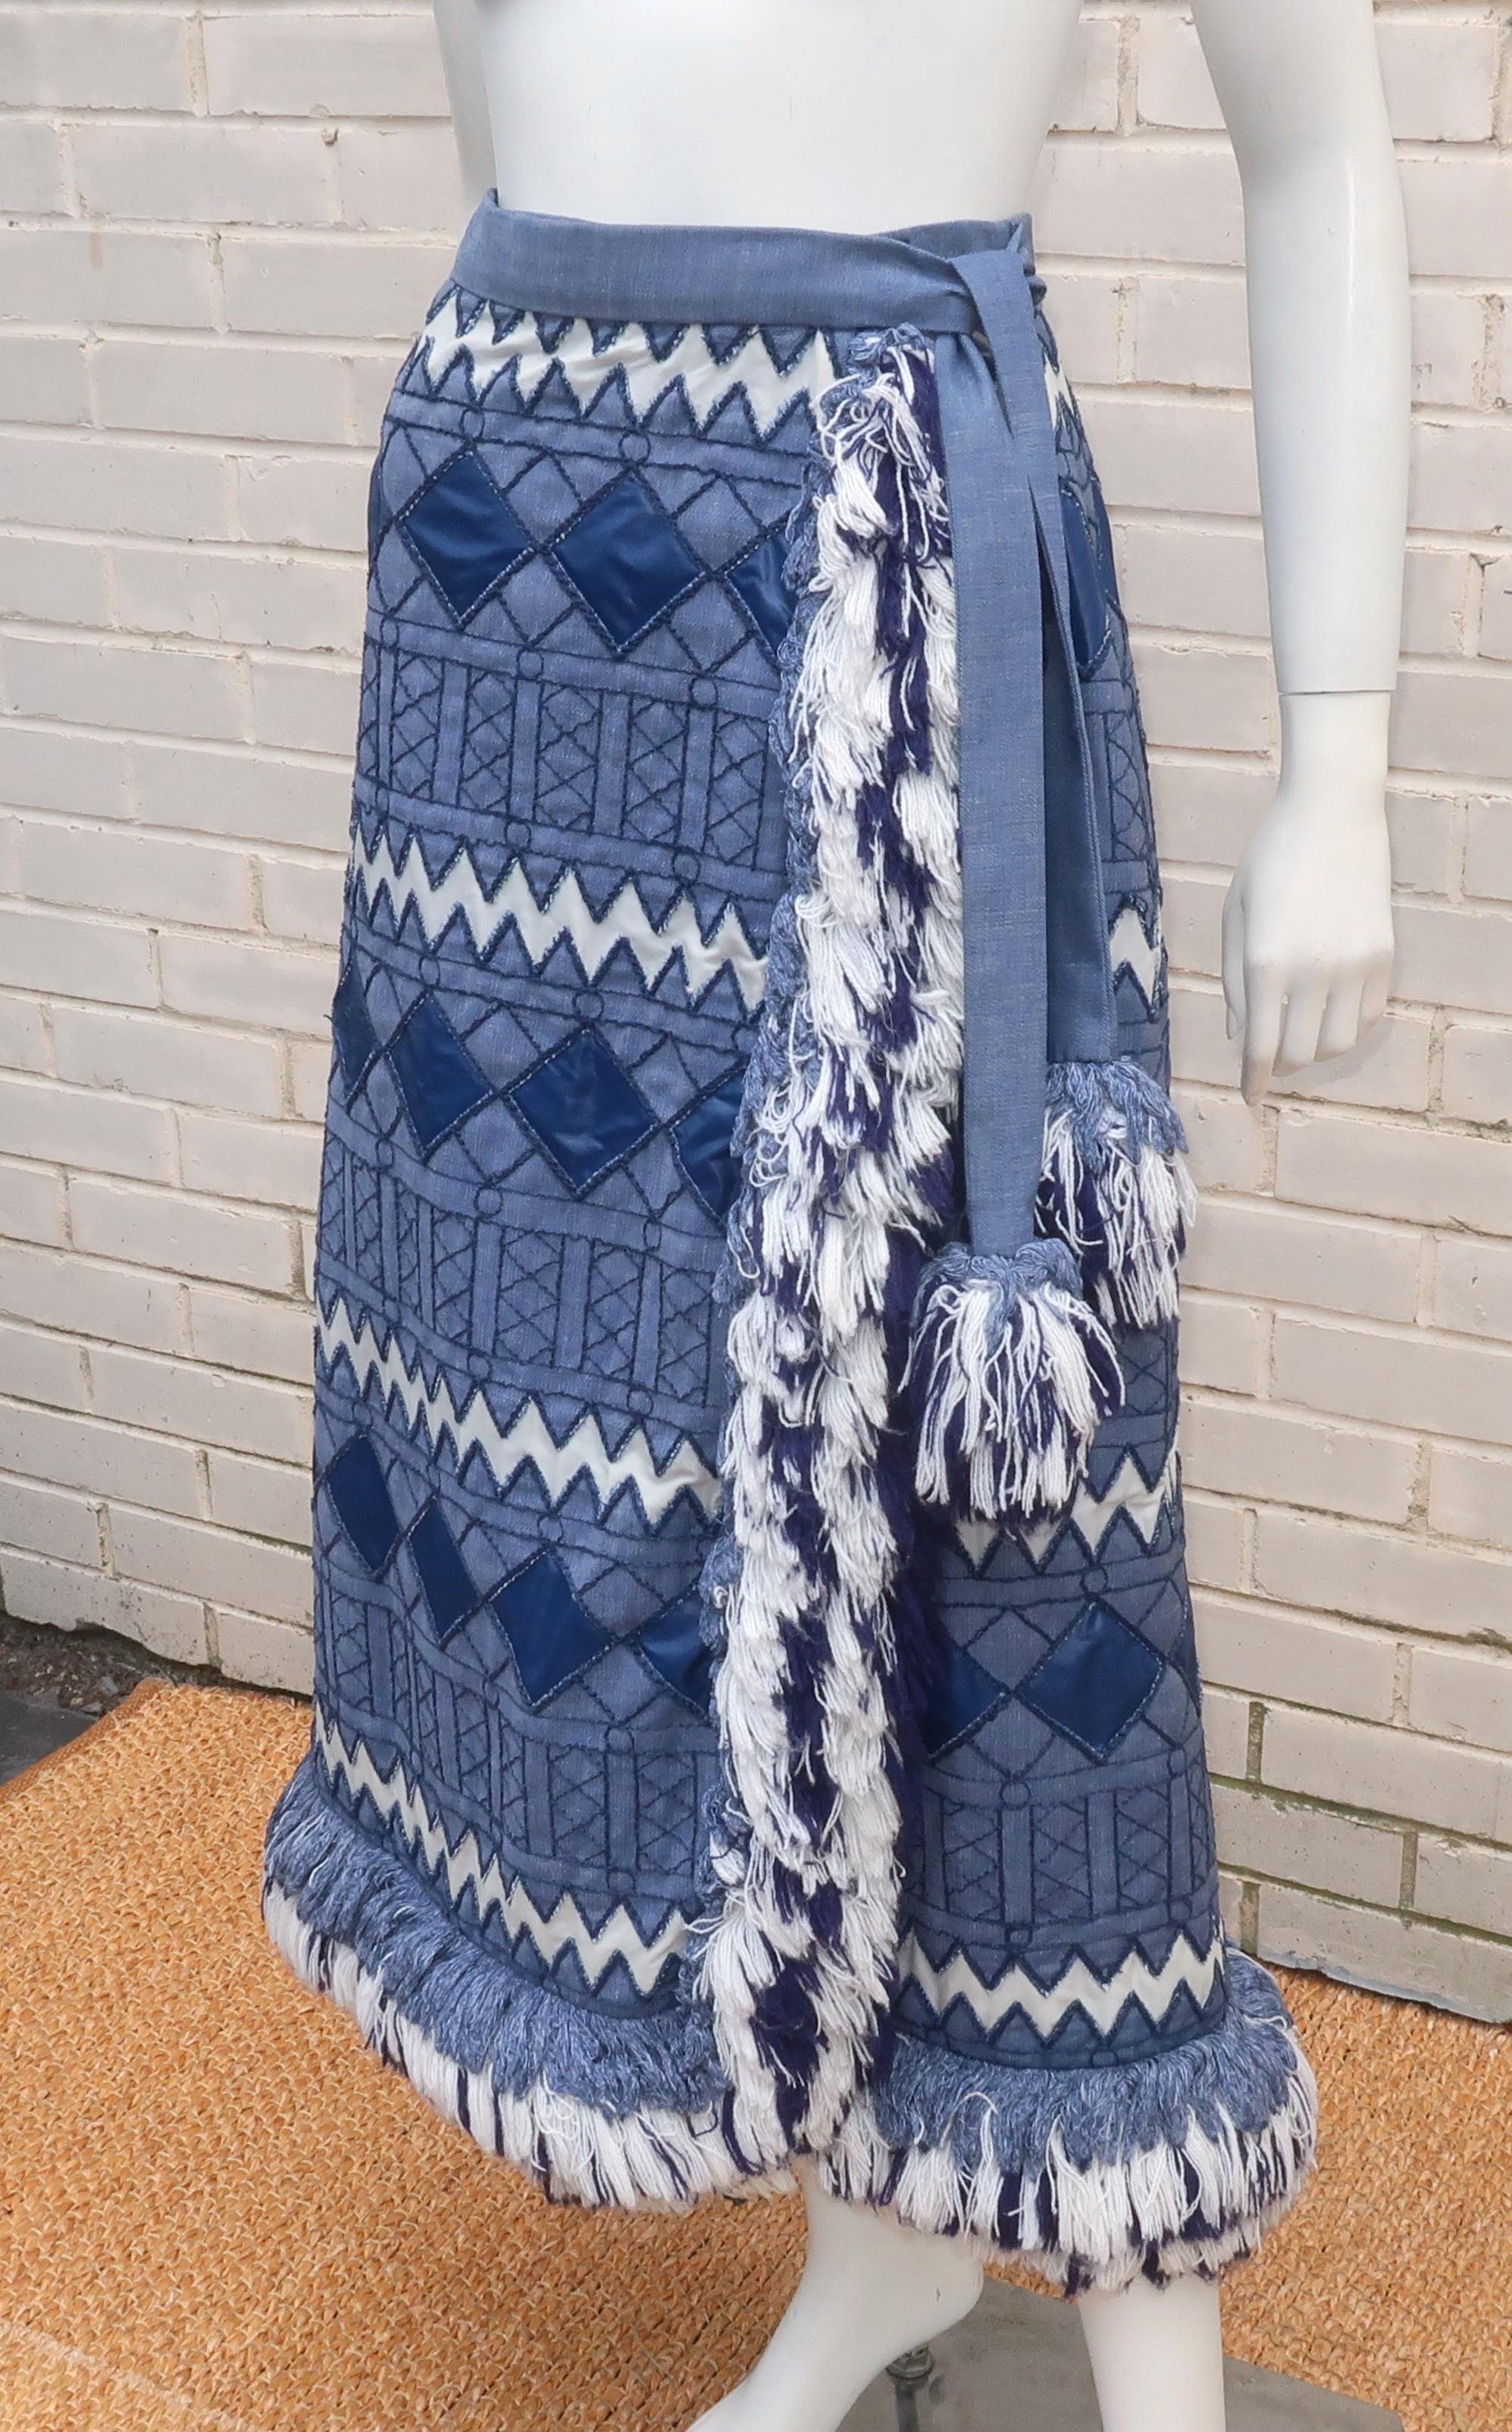 vintage denim wrap skirt